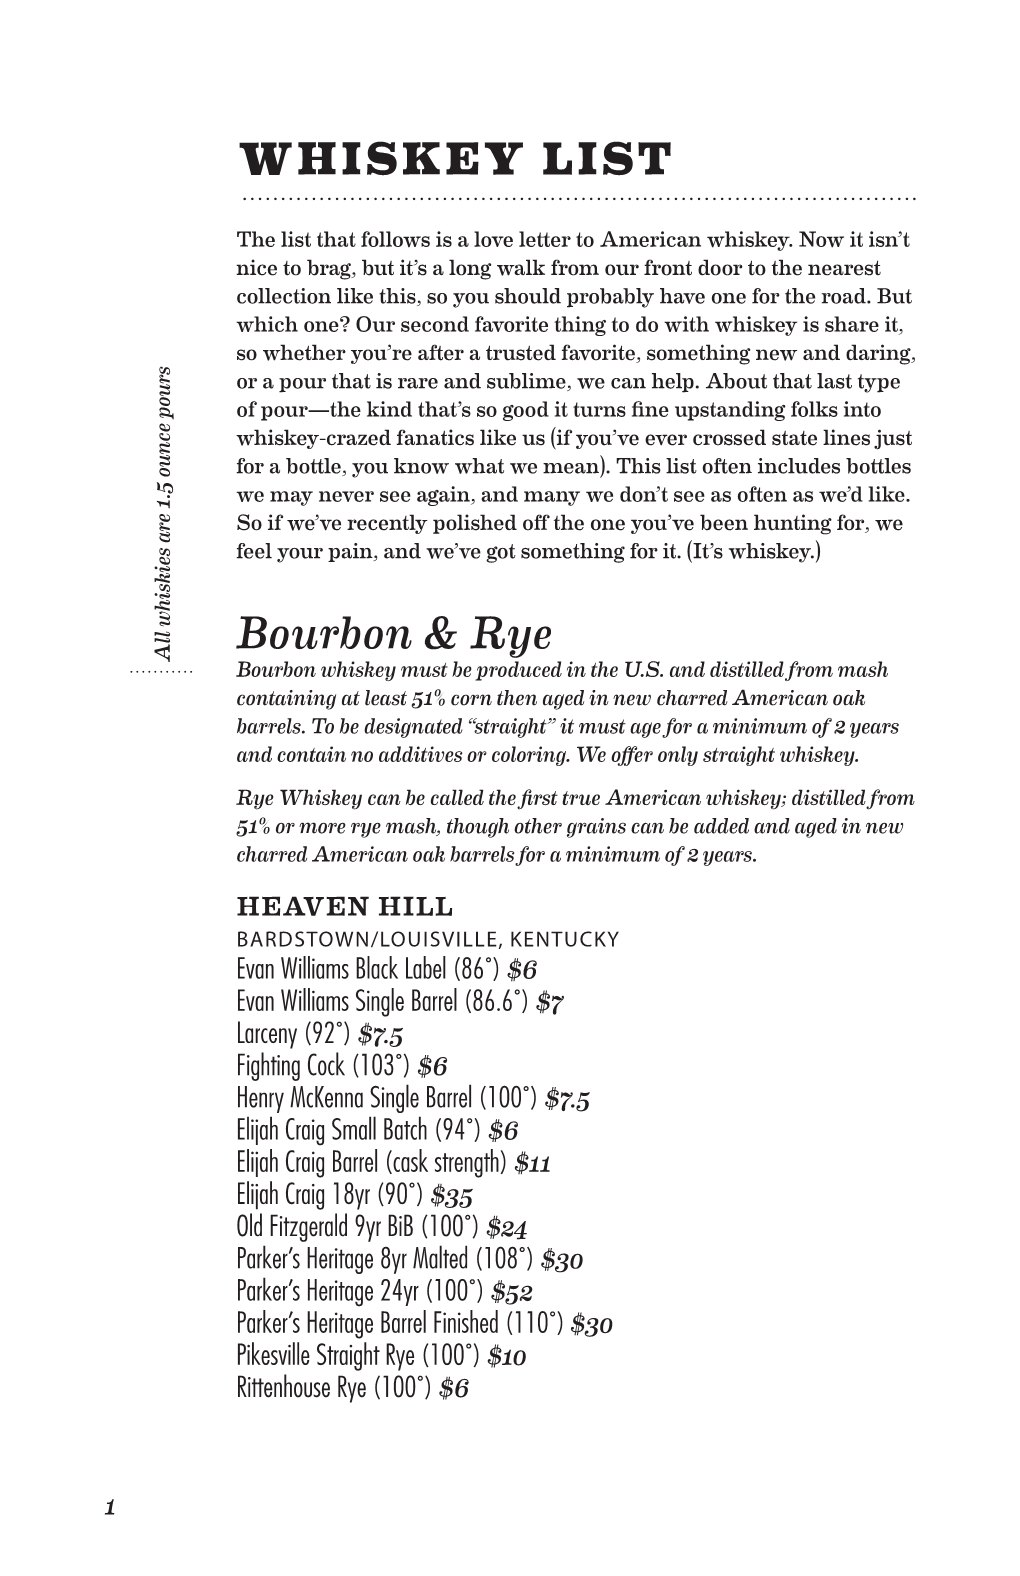 Bourbon & Rye WHISKEY LIST